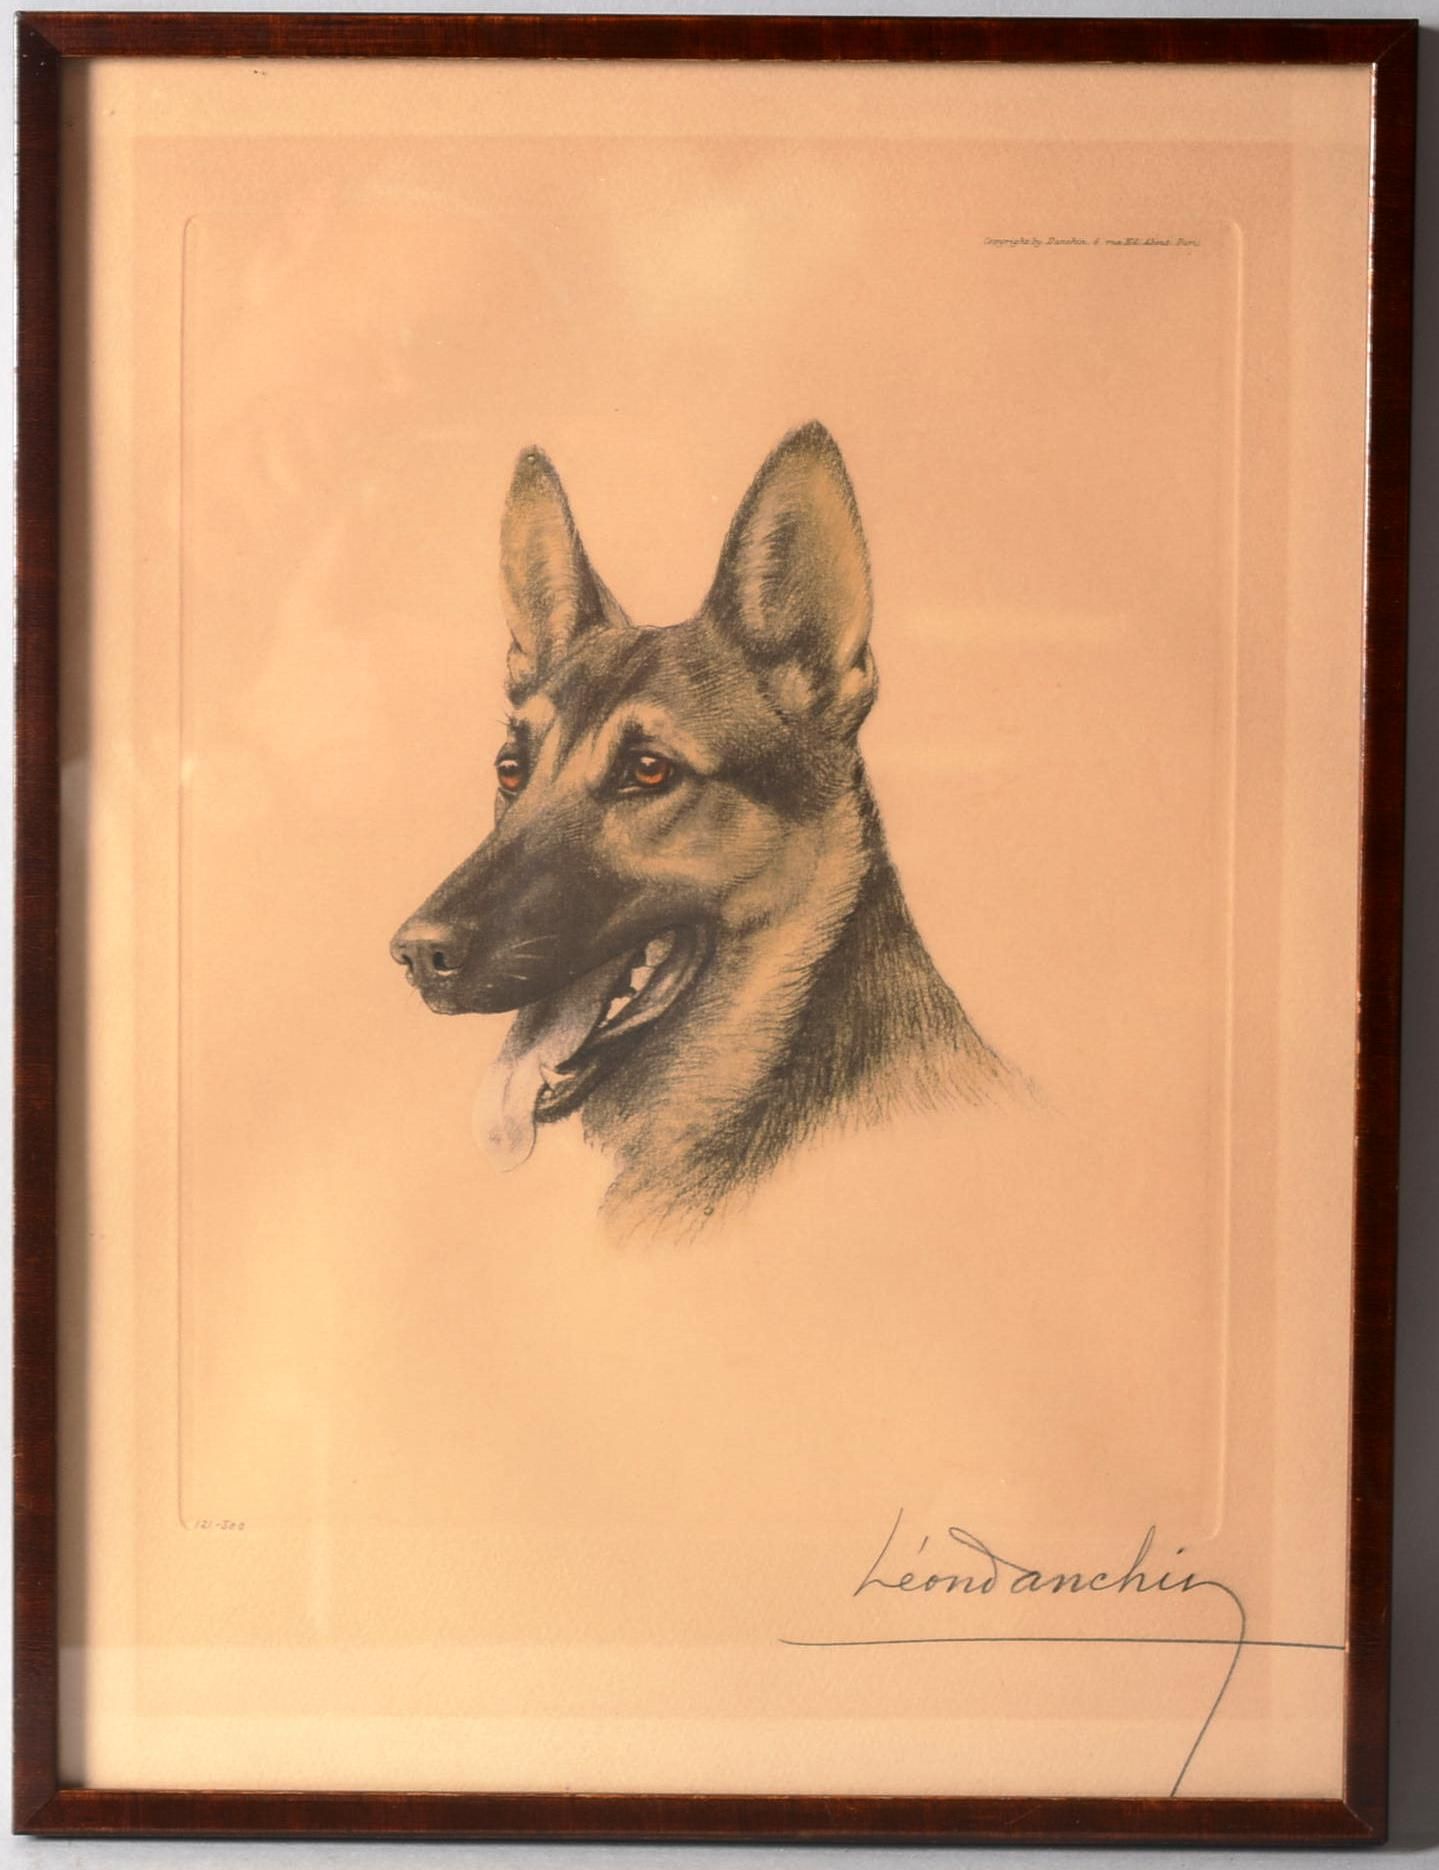 Léon DANCHIN (1887-1938) 莱昂-丹辛 (1887-1938)

"一只德国牧羊犬的头"。

石版画右下方有铅笔签名。编号为121/500&hellip;